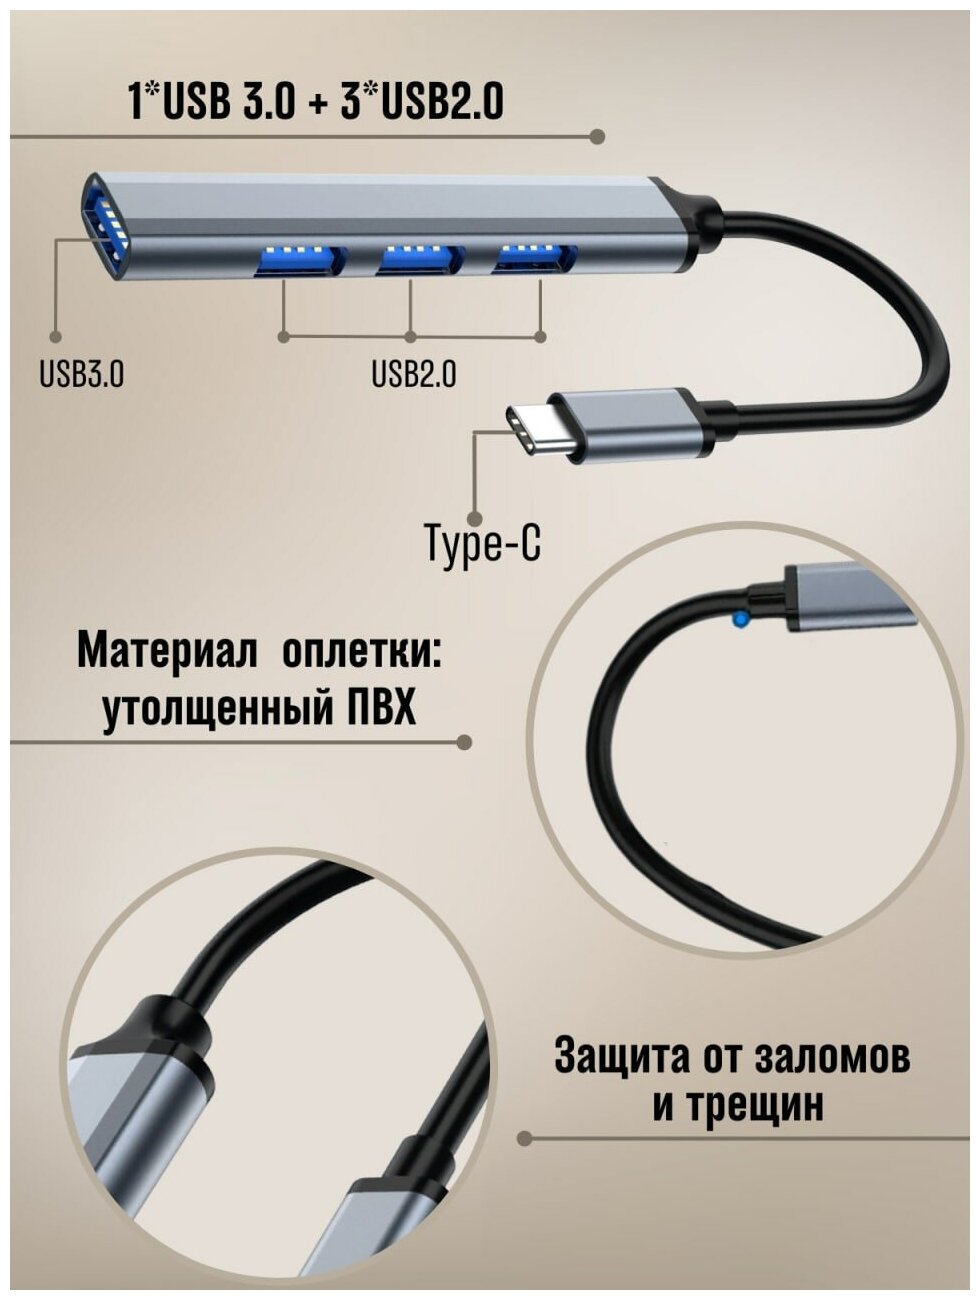 Переходник для MacBook / USB 3.0 (4 Порта) / USB HUB / Концентратор / Otg Type-C / Адаптер Type-C